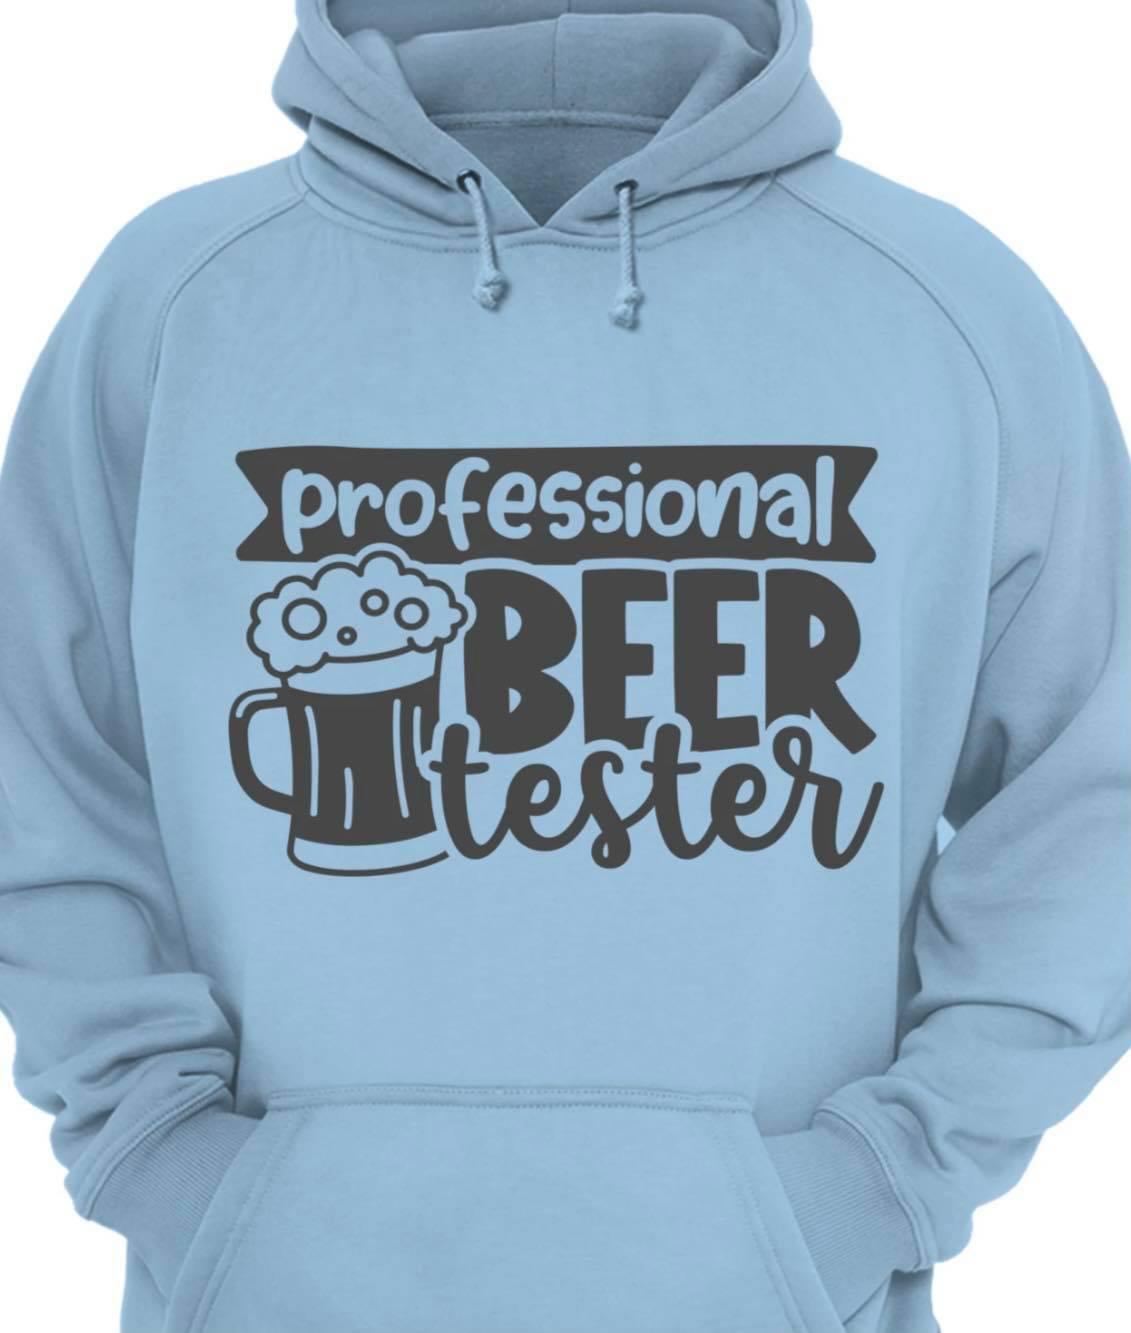 Professional beer tester - Cup of beer, gift for beer drinker